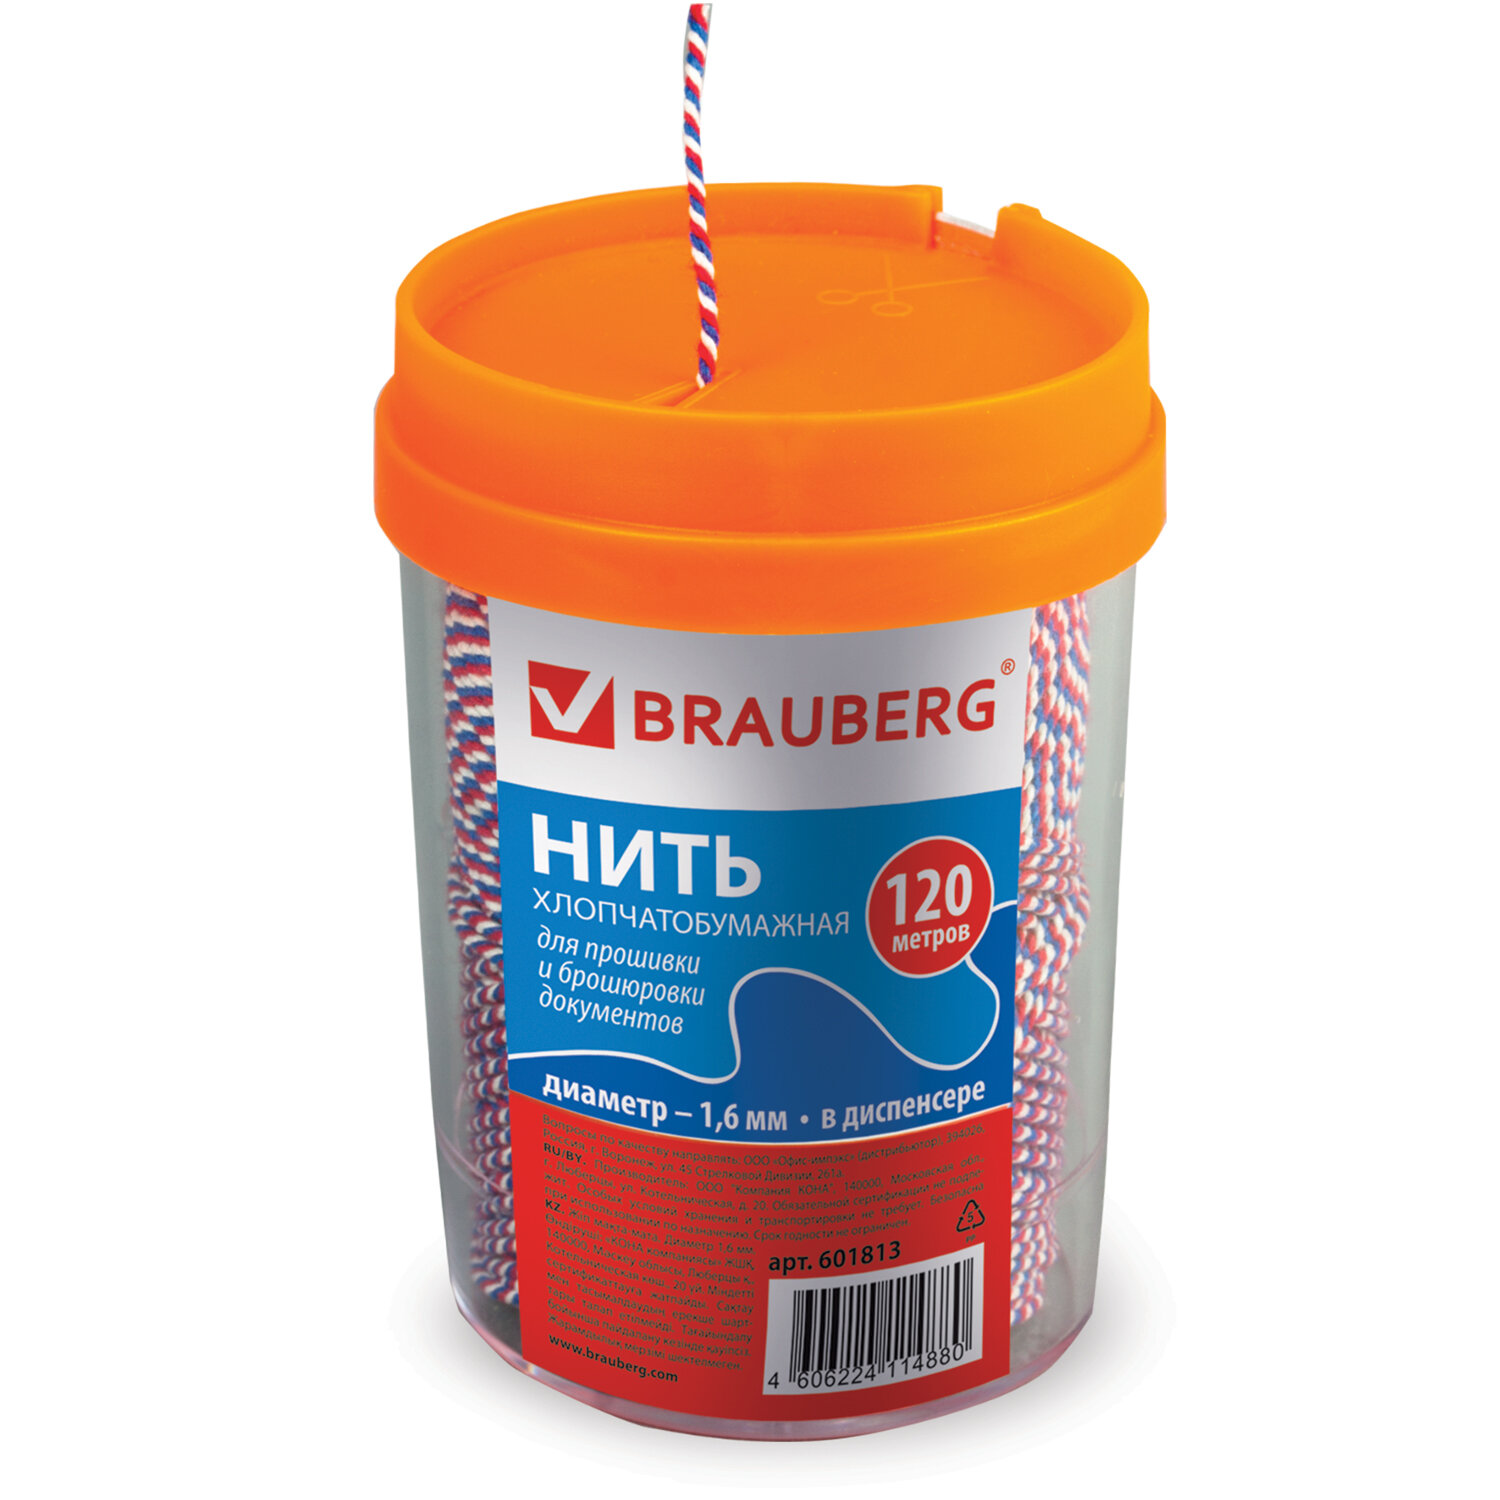 Brauberg  BRAUBERG 601813,  2 .